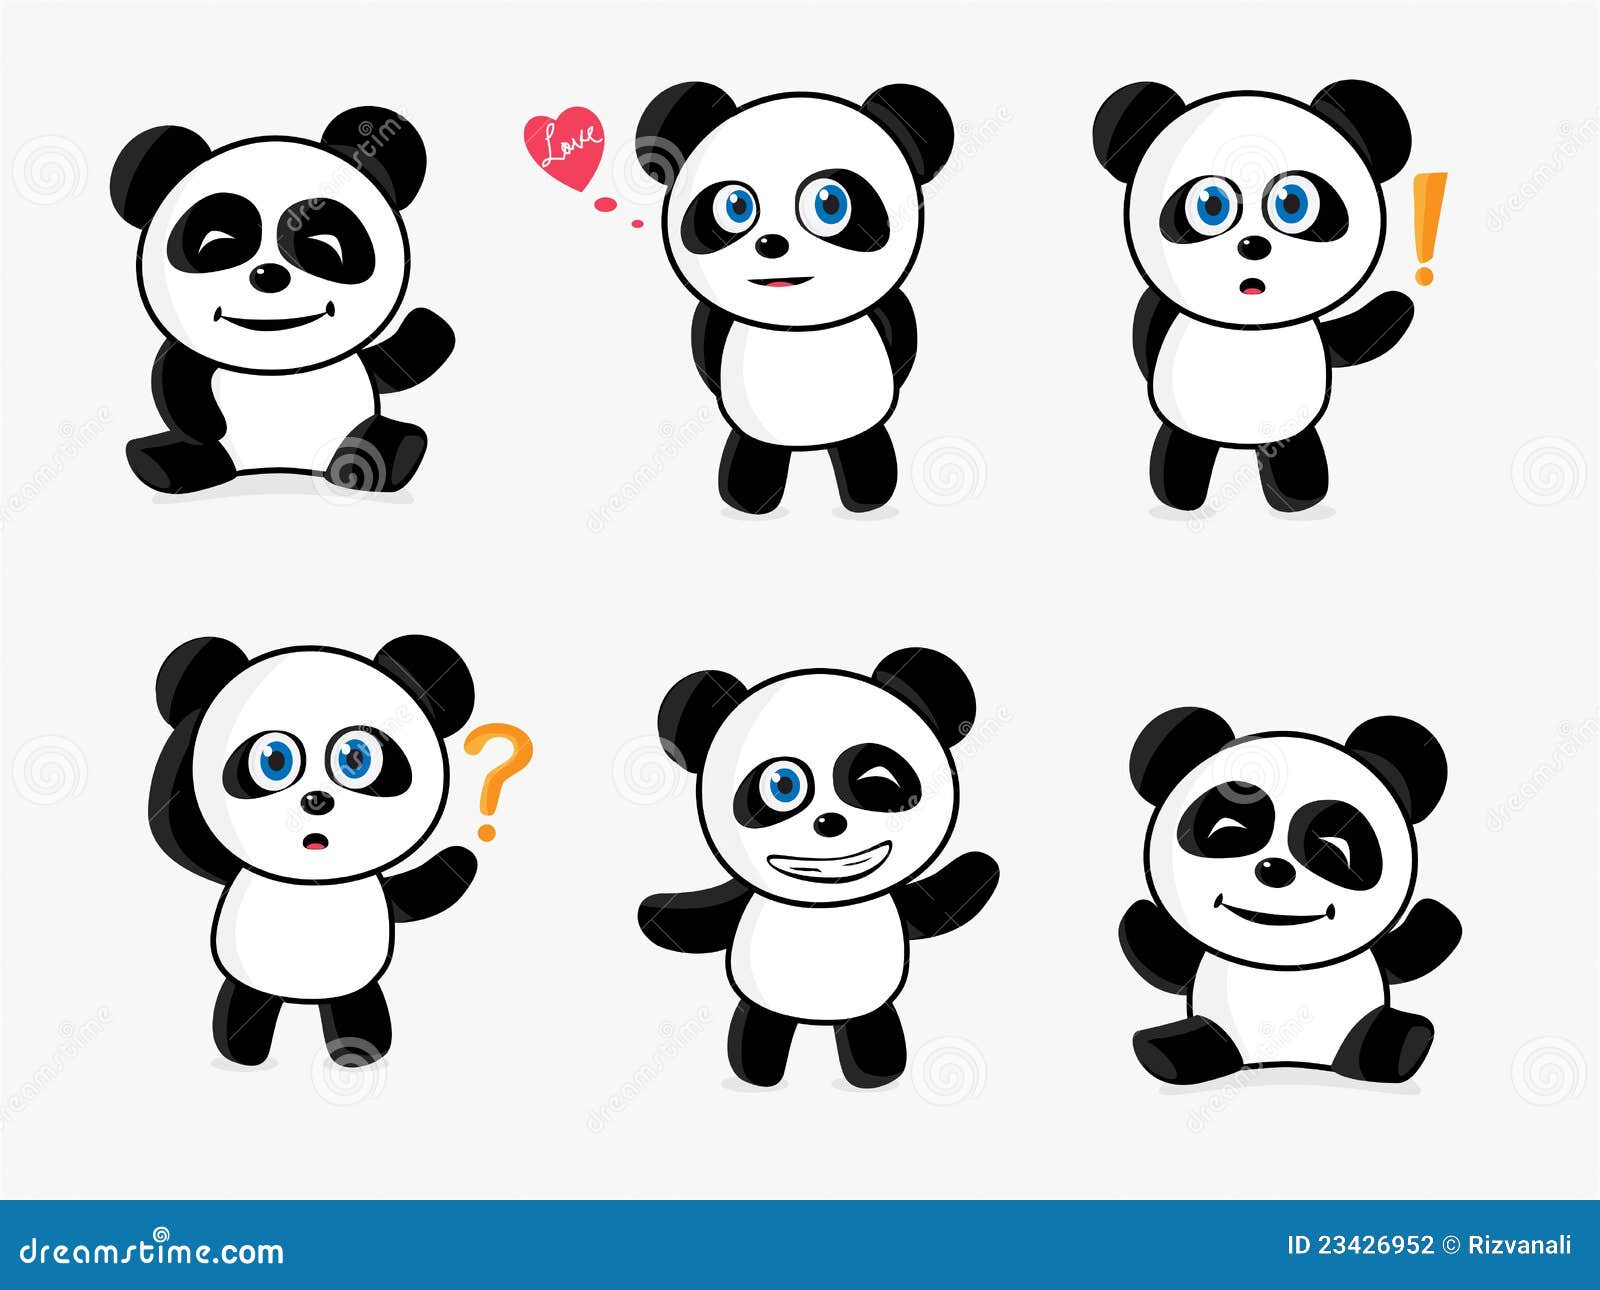 Cute Panda stock vector. Illustration of creative, white - 23426952